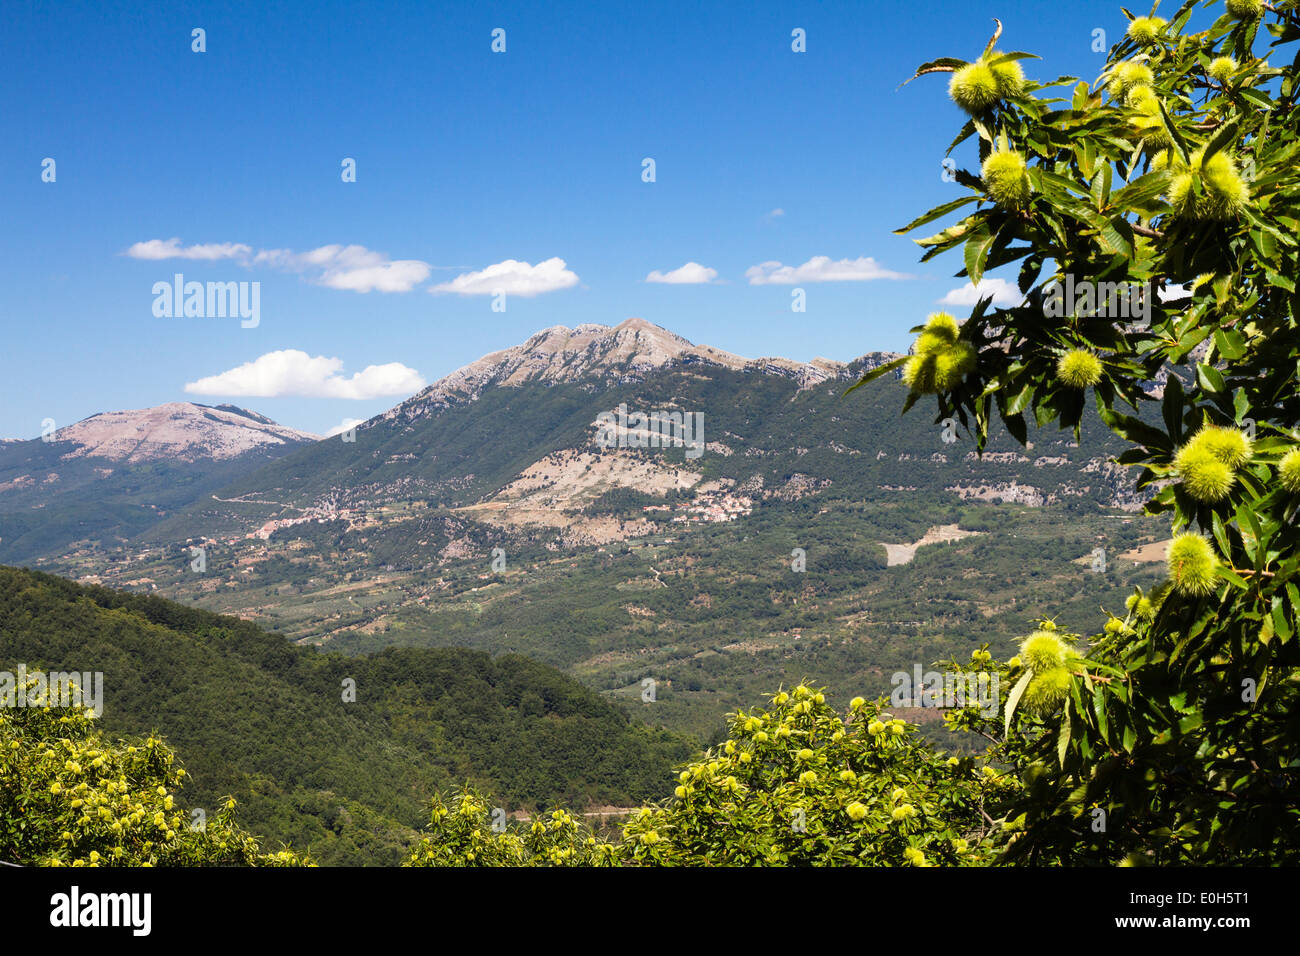 Mountain panorama with chestnut tree, Castanea sativa, Cilento National Park, Cilento, Campania, Southern Italy, Europe Stock Photo